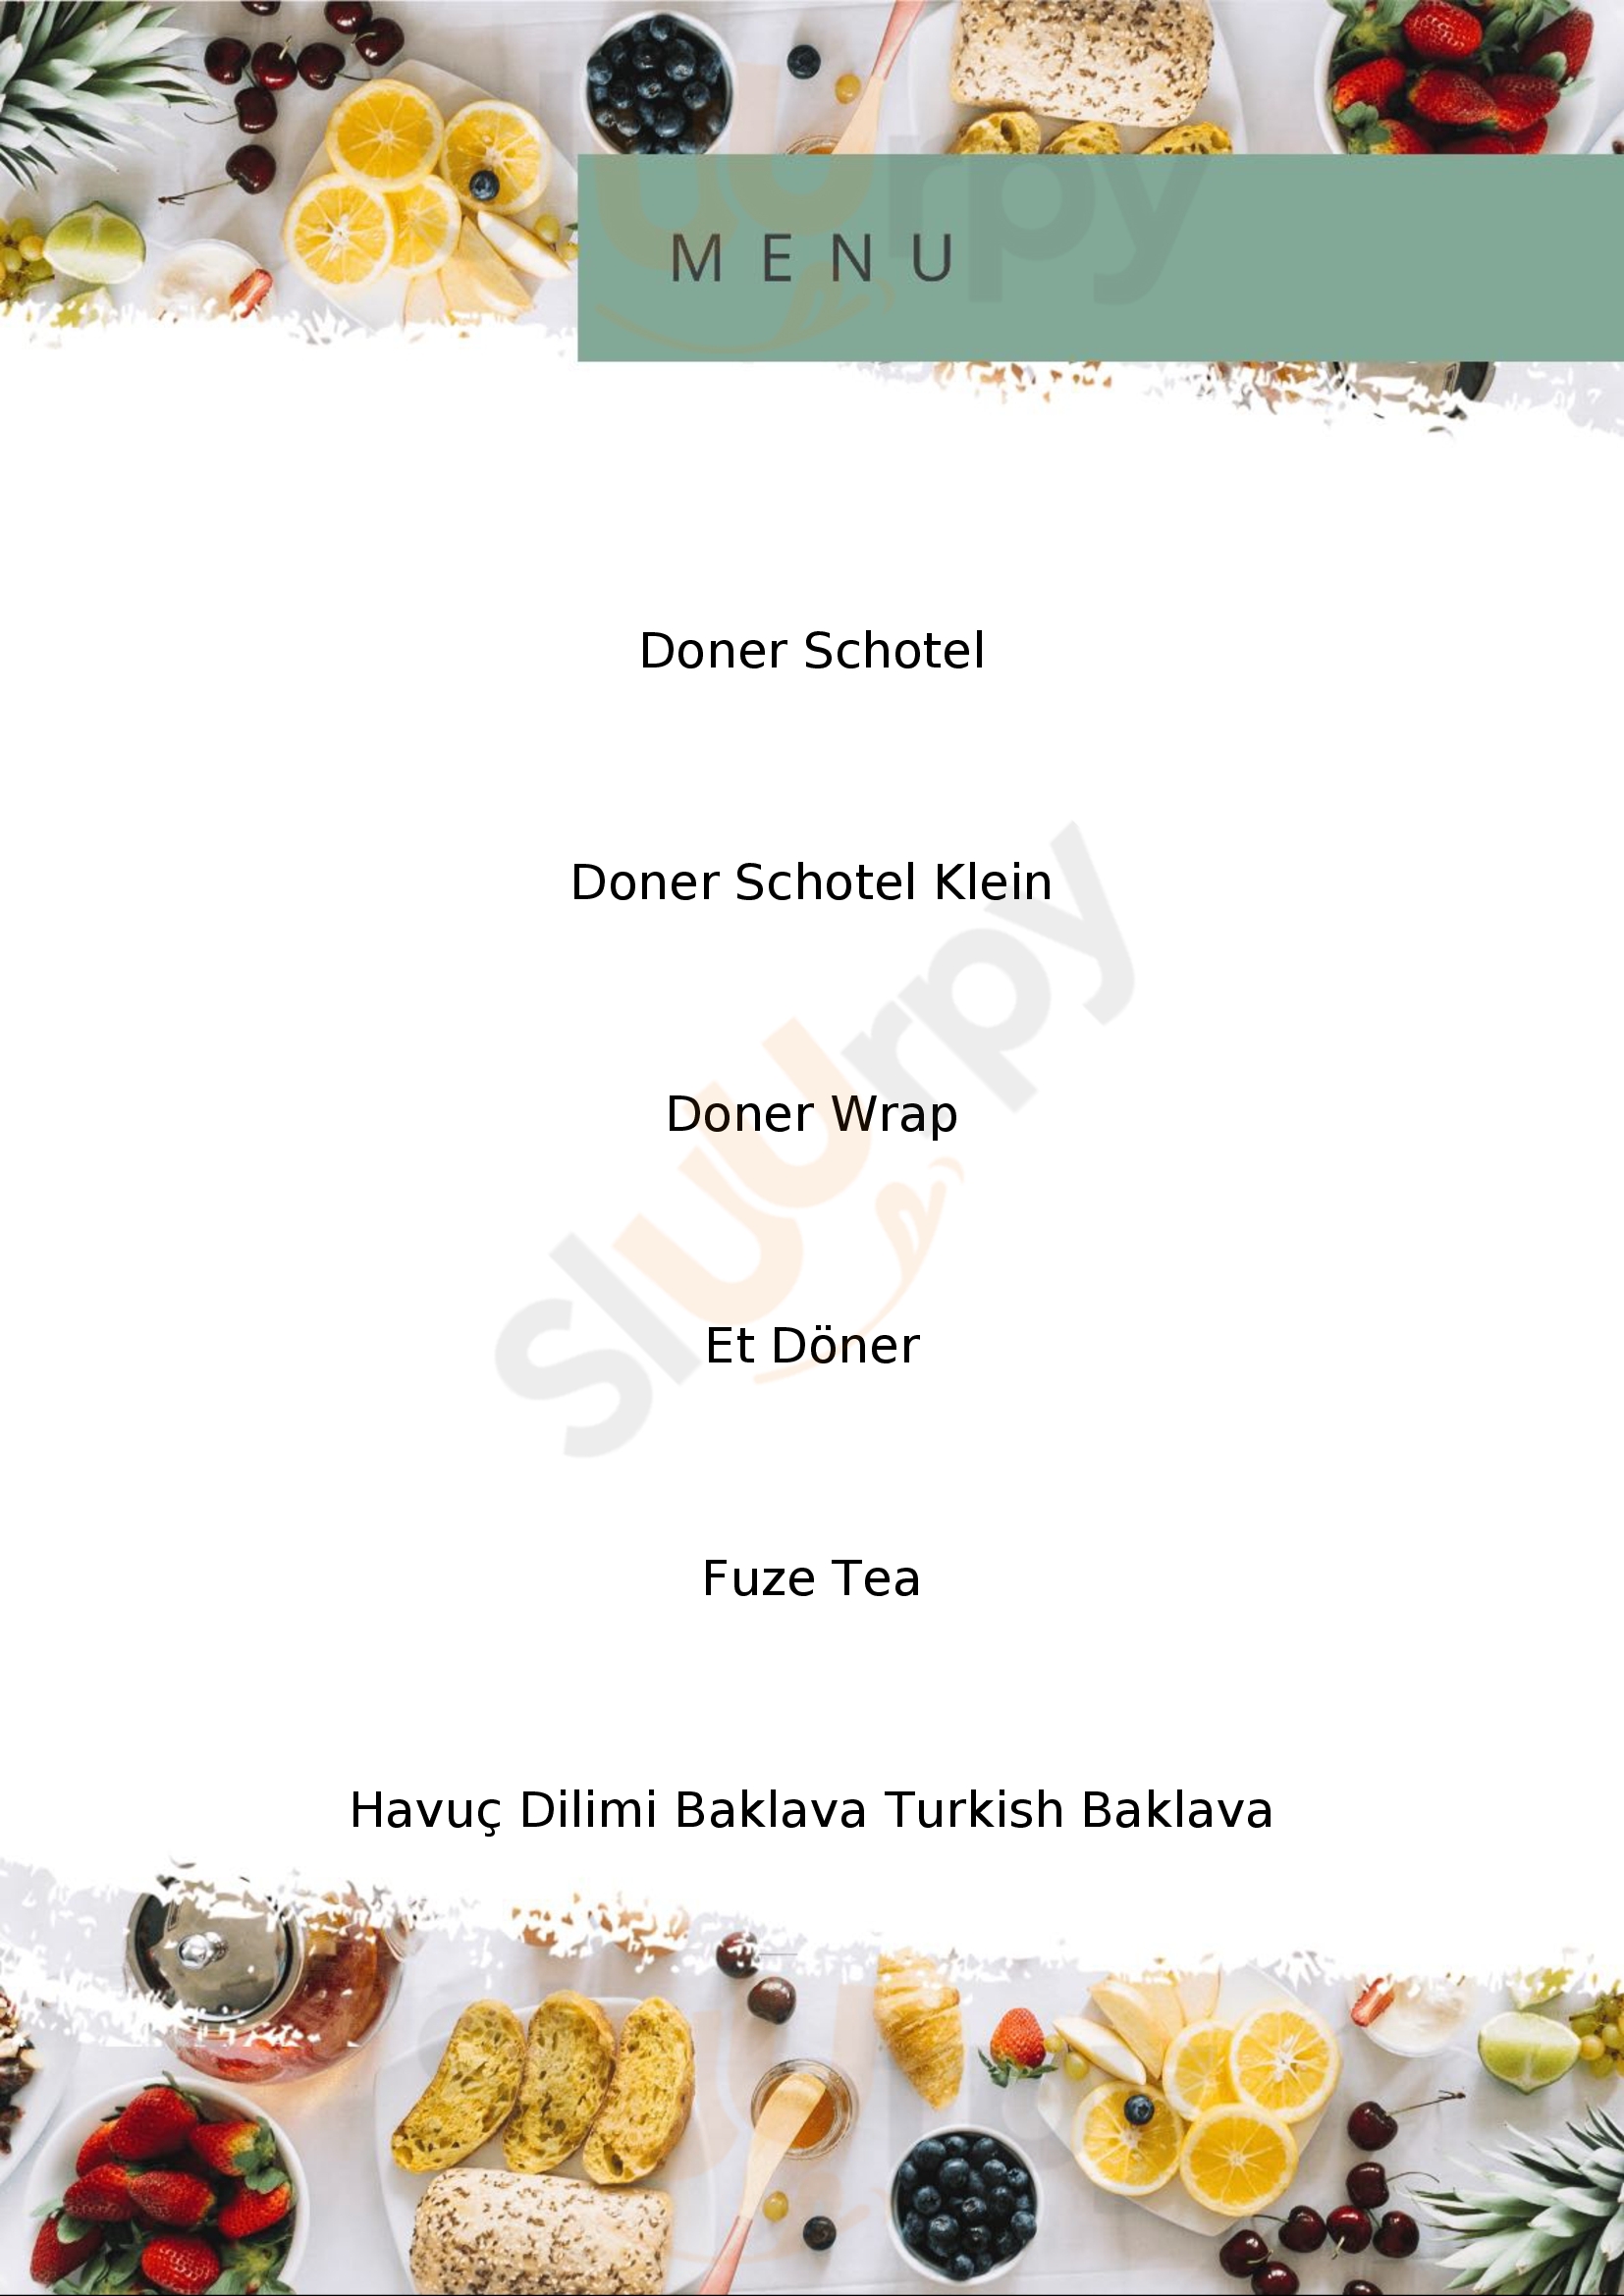 Atilla Turkish Food Amsterdam Menu - 1